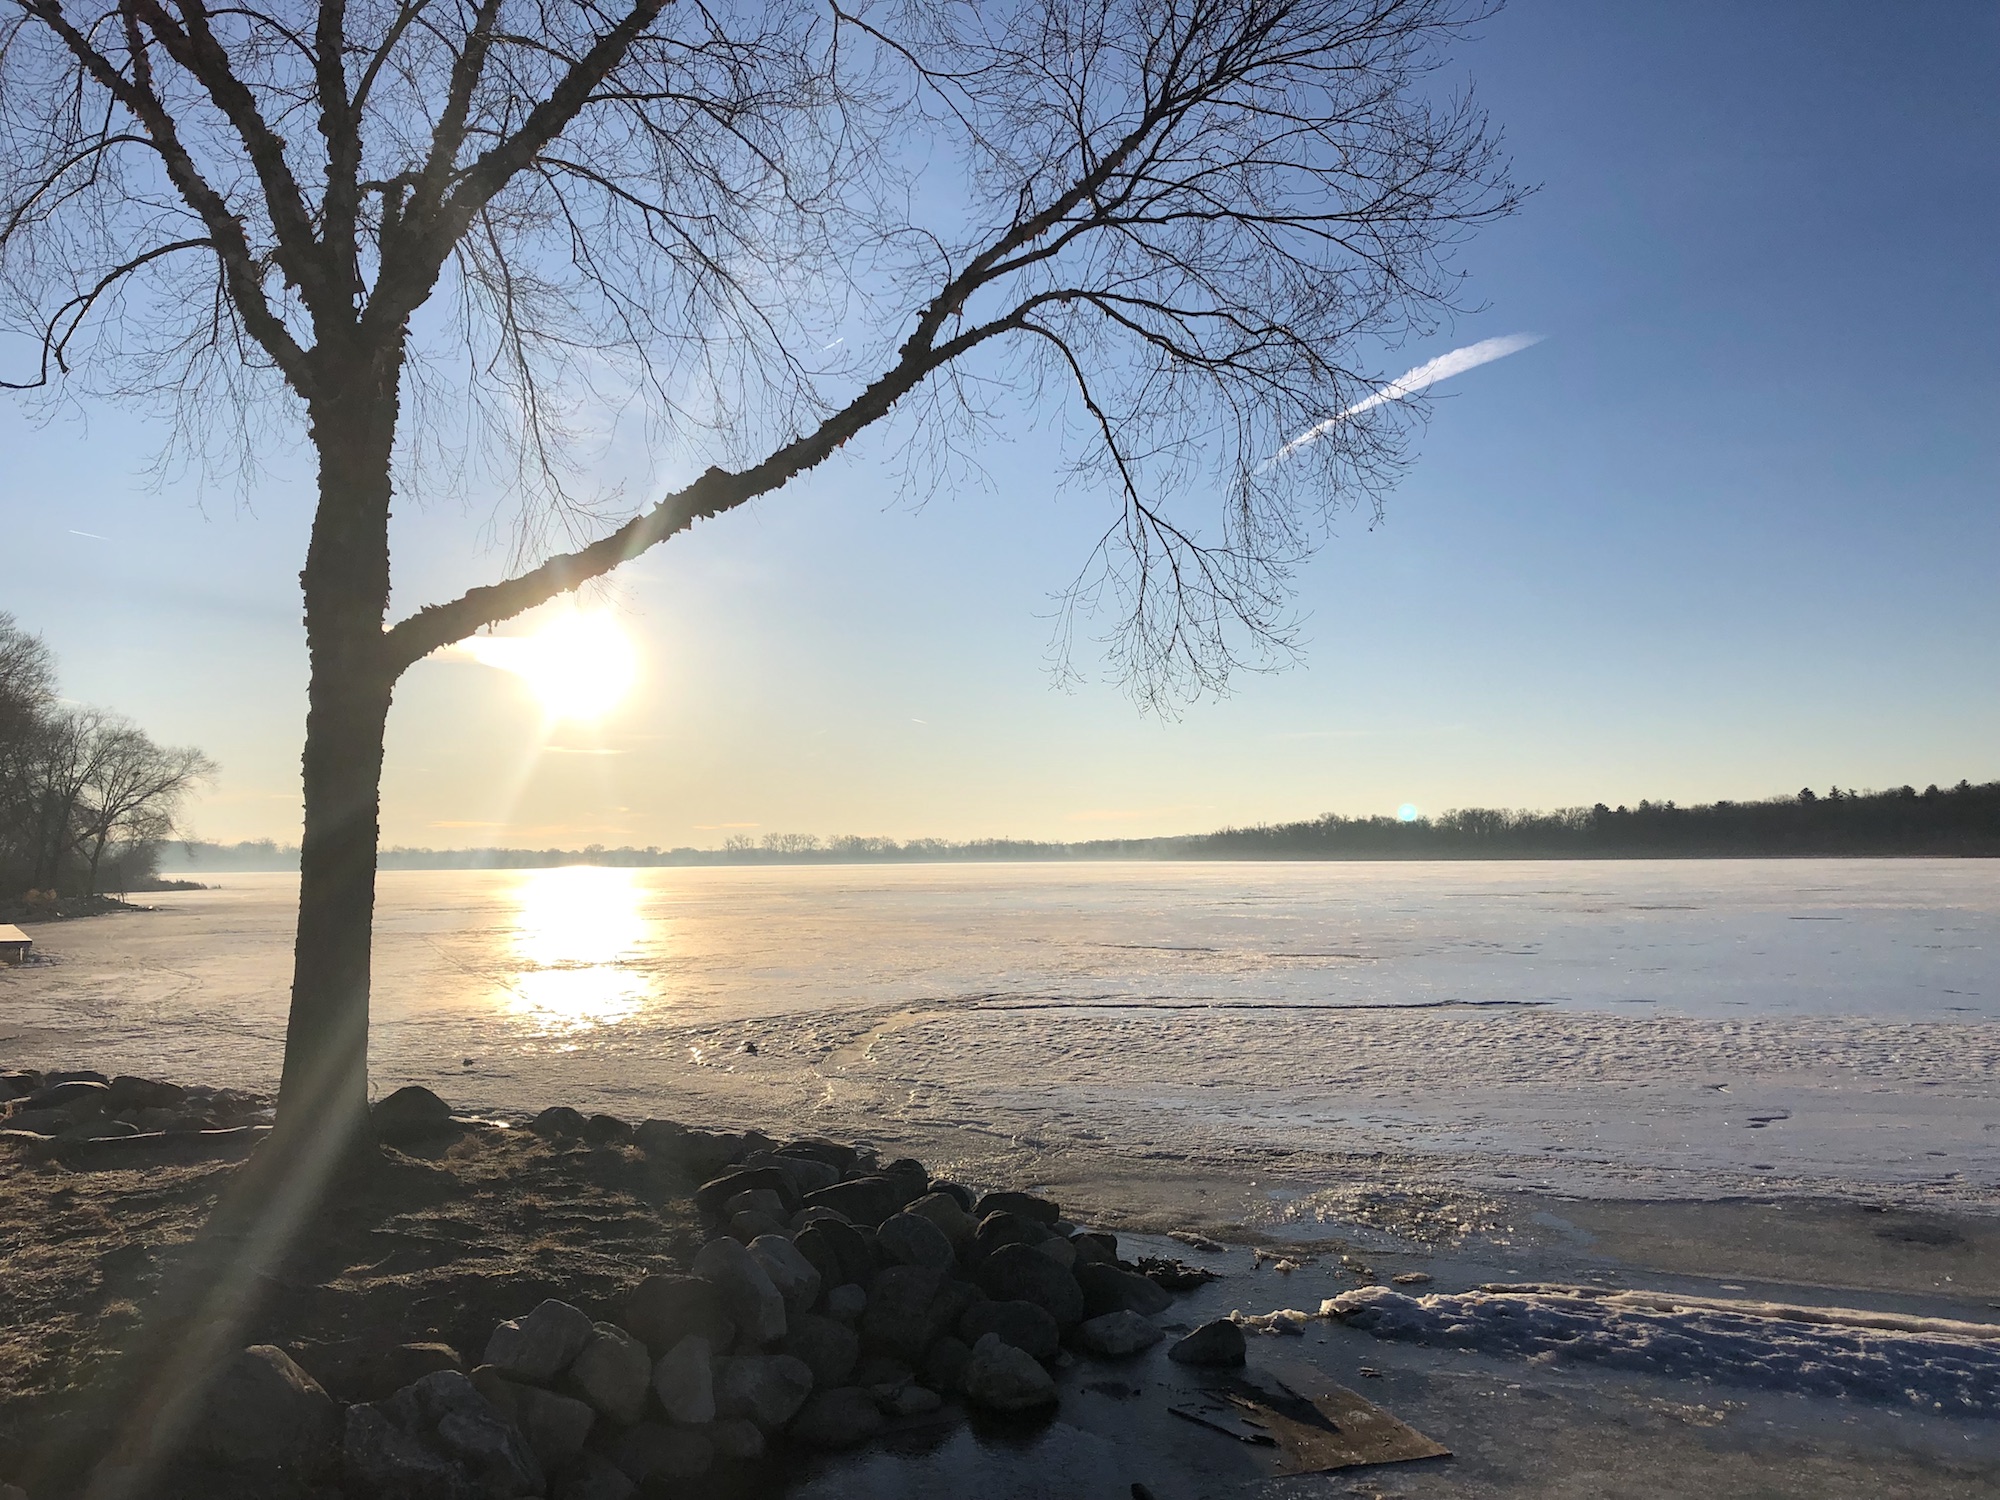 Lake Wingra on March 19, 2019.